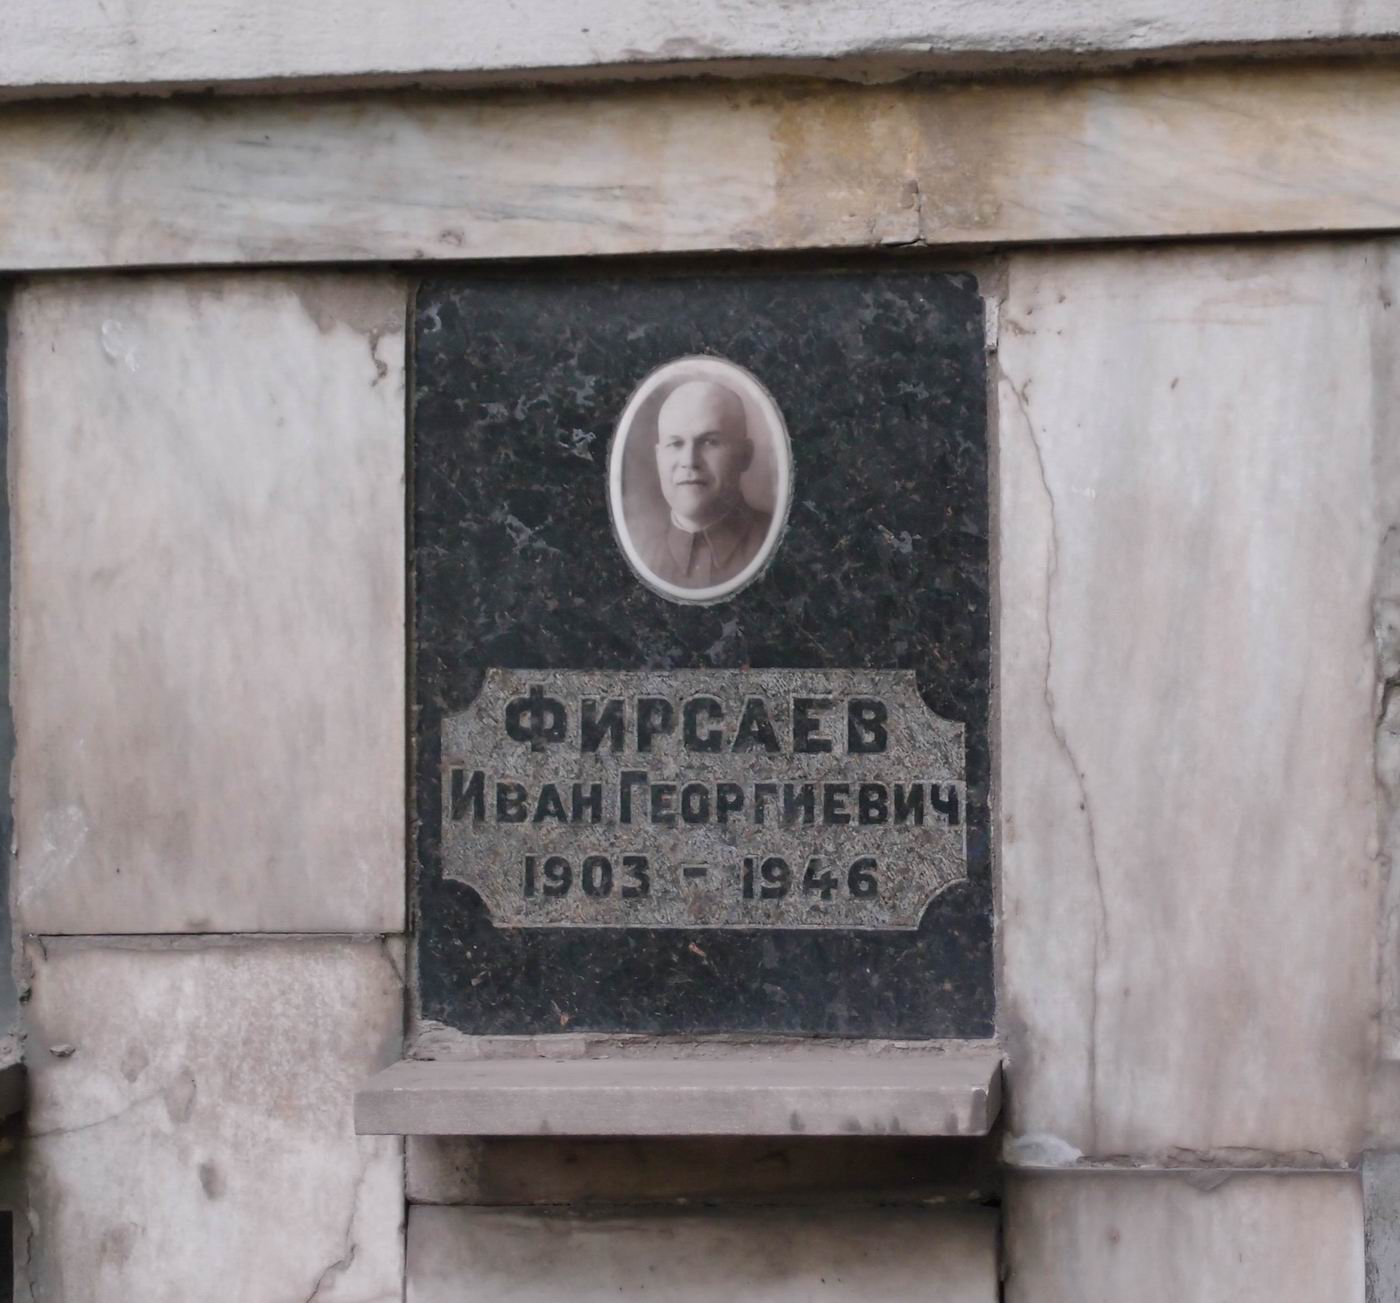 Плита на нише Фирсаева И.Г. (1903-1946), на Новодевичьем кладбище (колумбарий [99]-3-1).